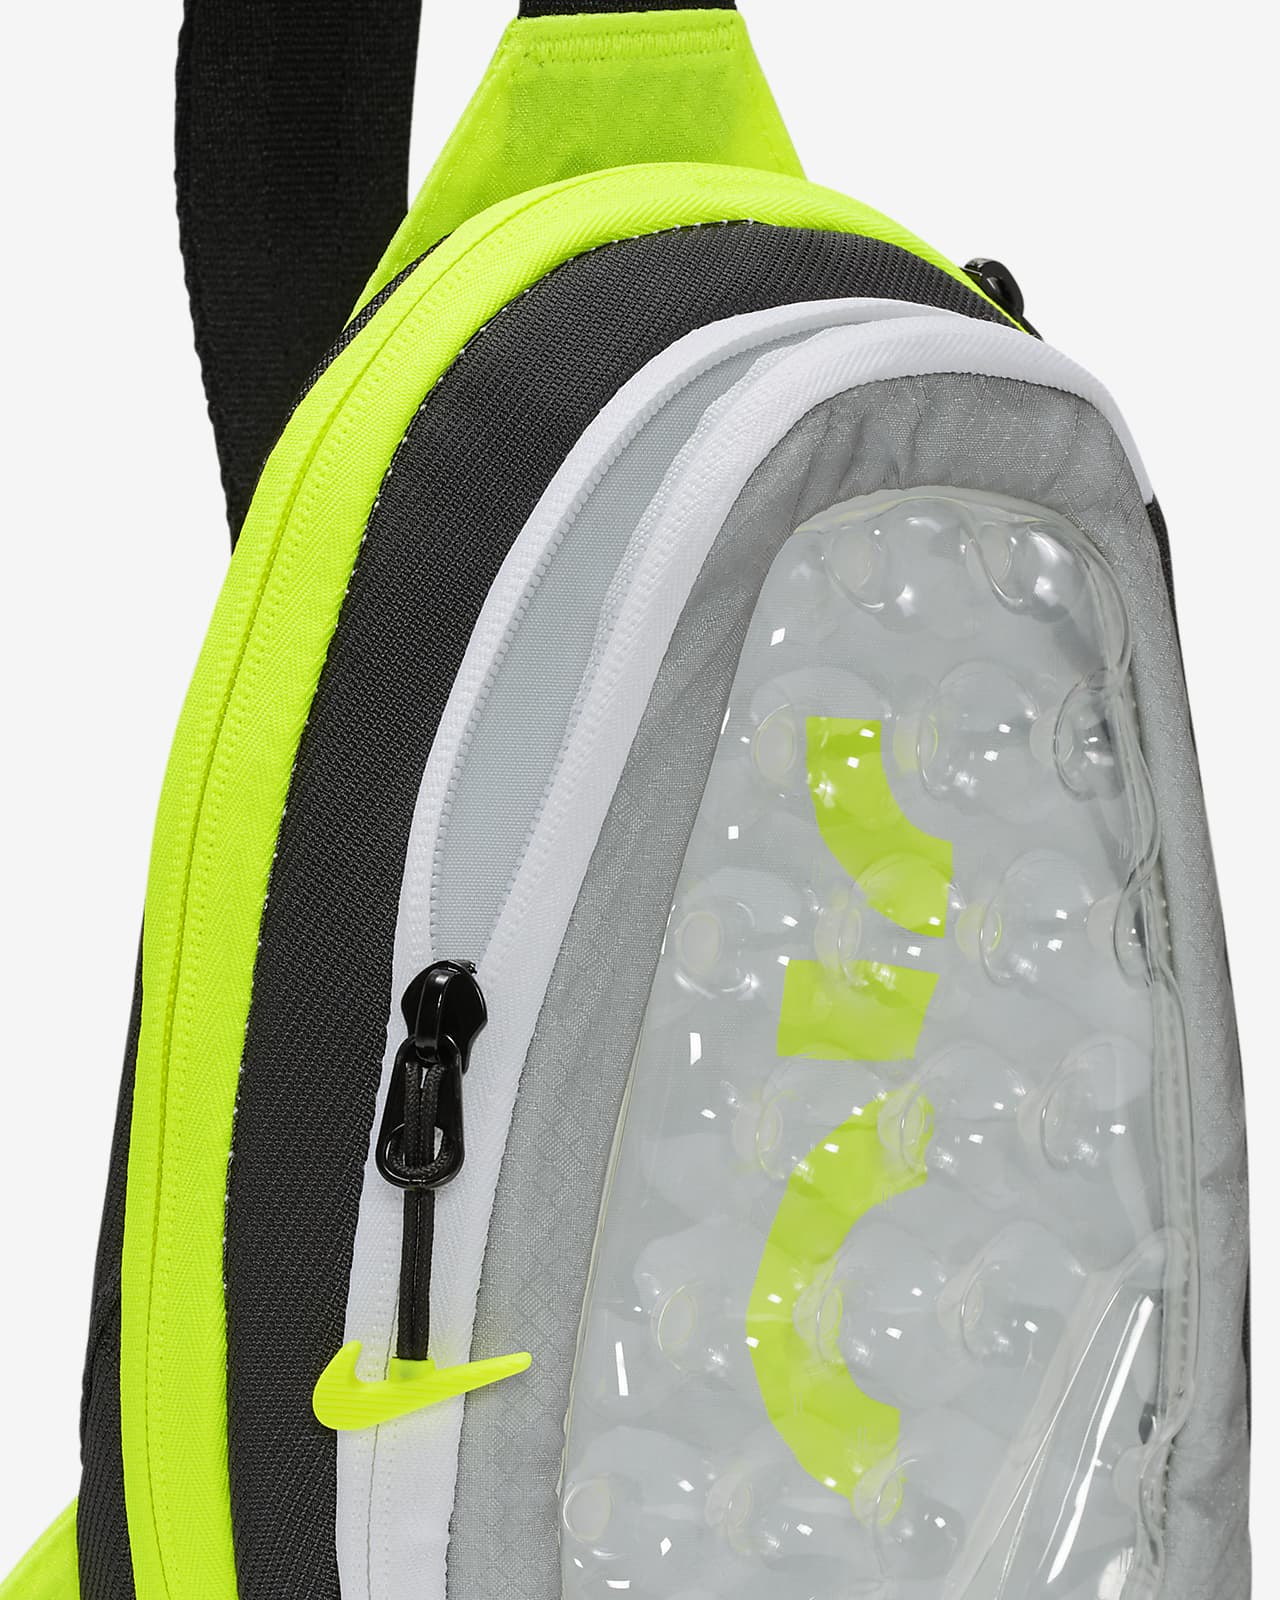 Nike - Grand sac bandoulière - Vert